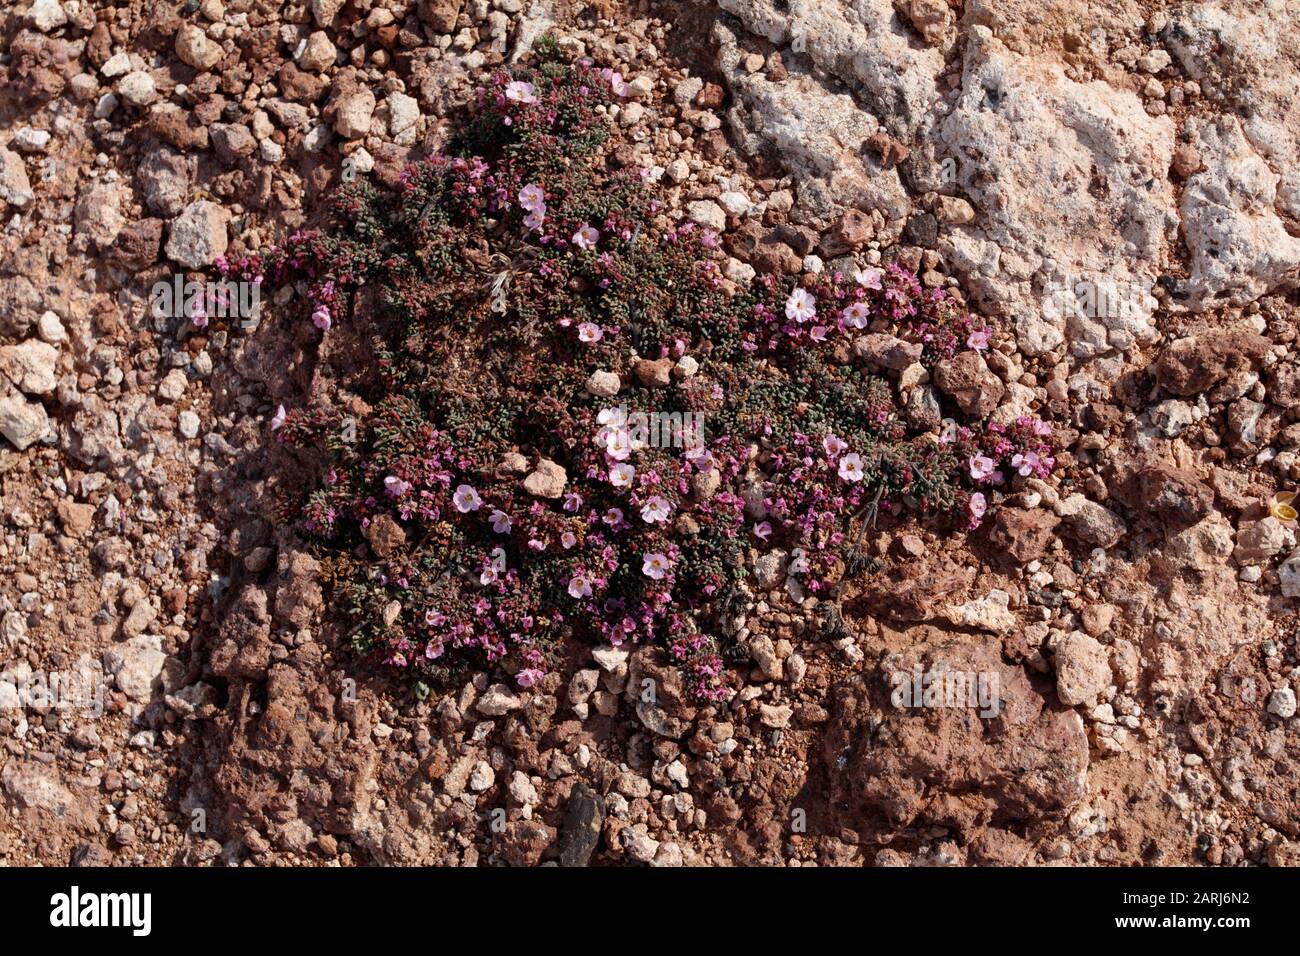 Frankenia pulverulenta on Lanzarote, Canary Islands Stock Photo